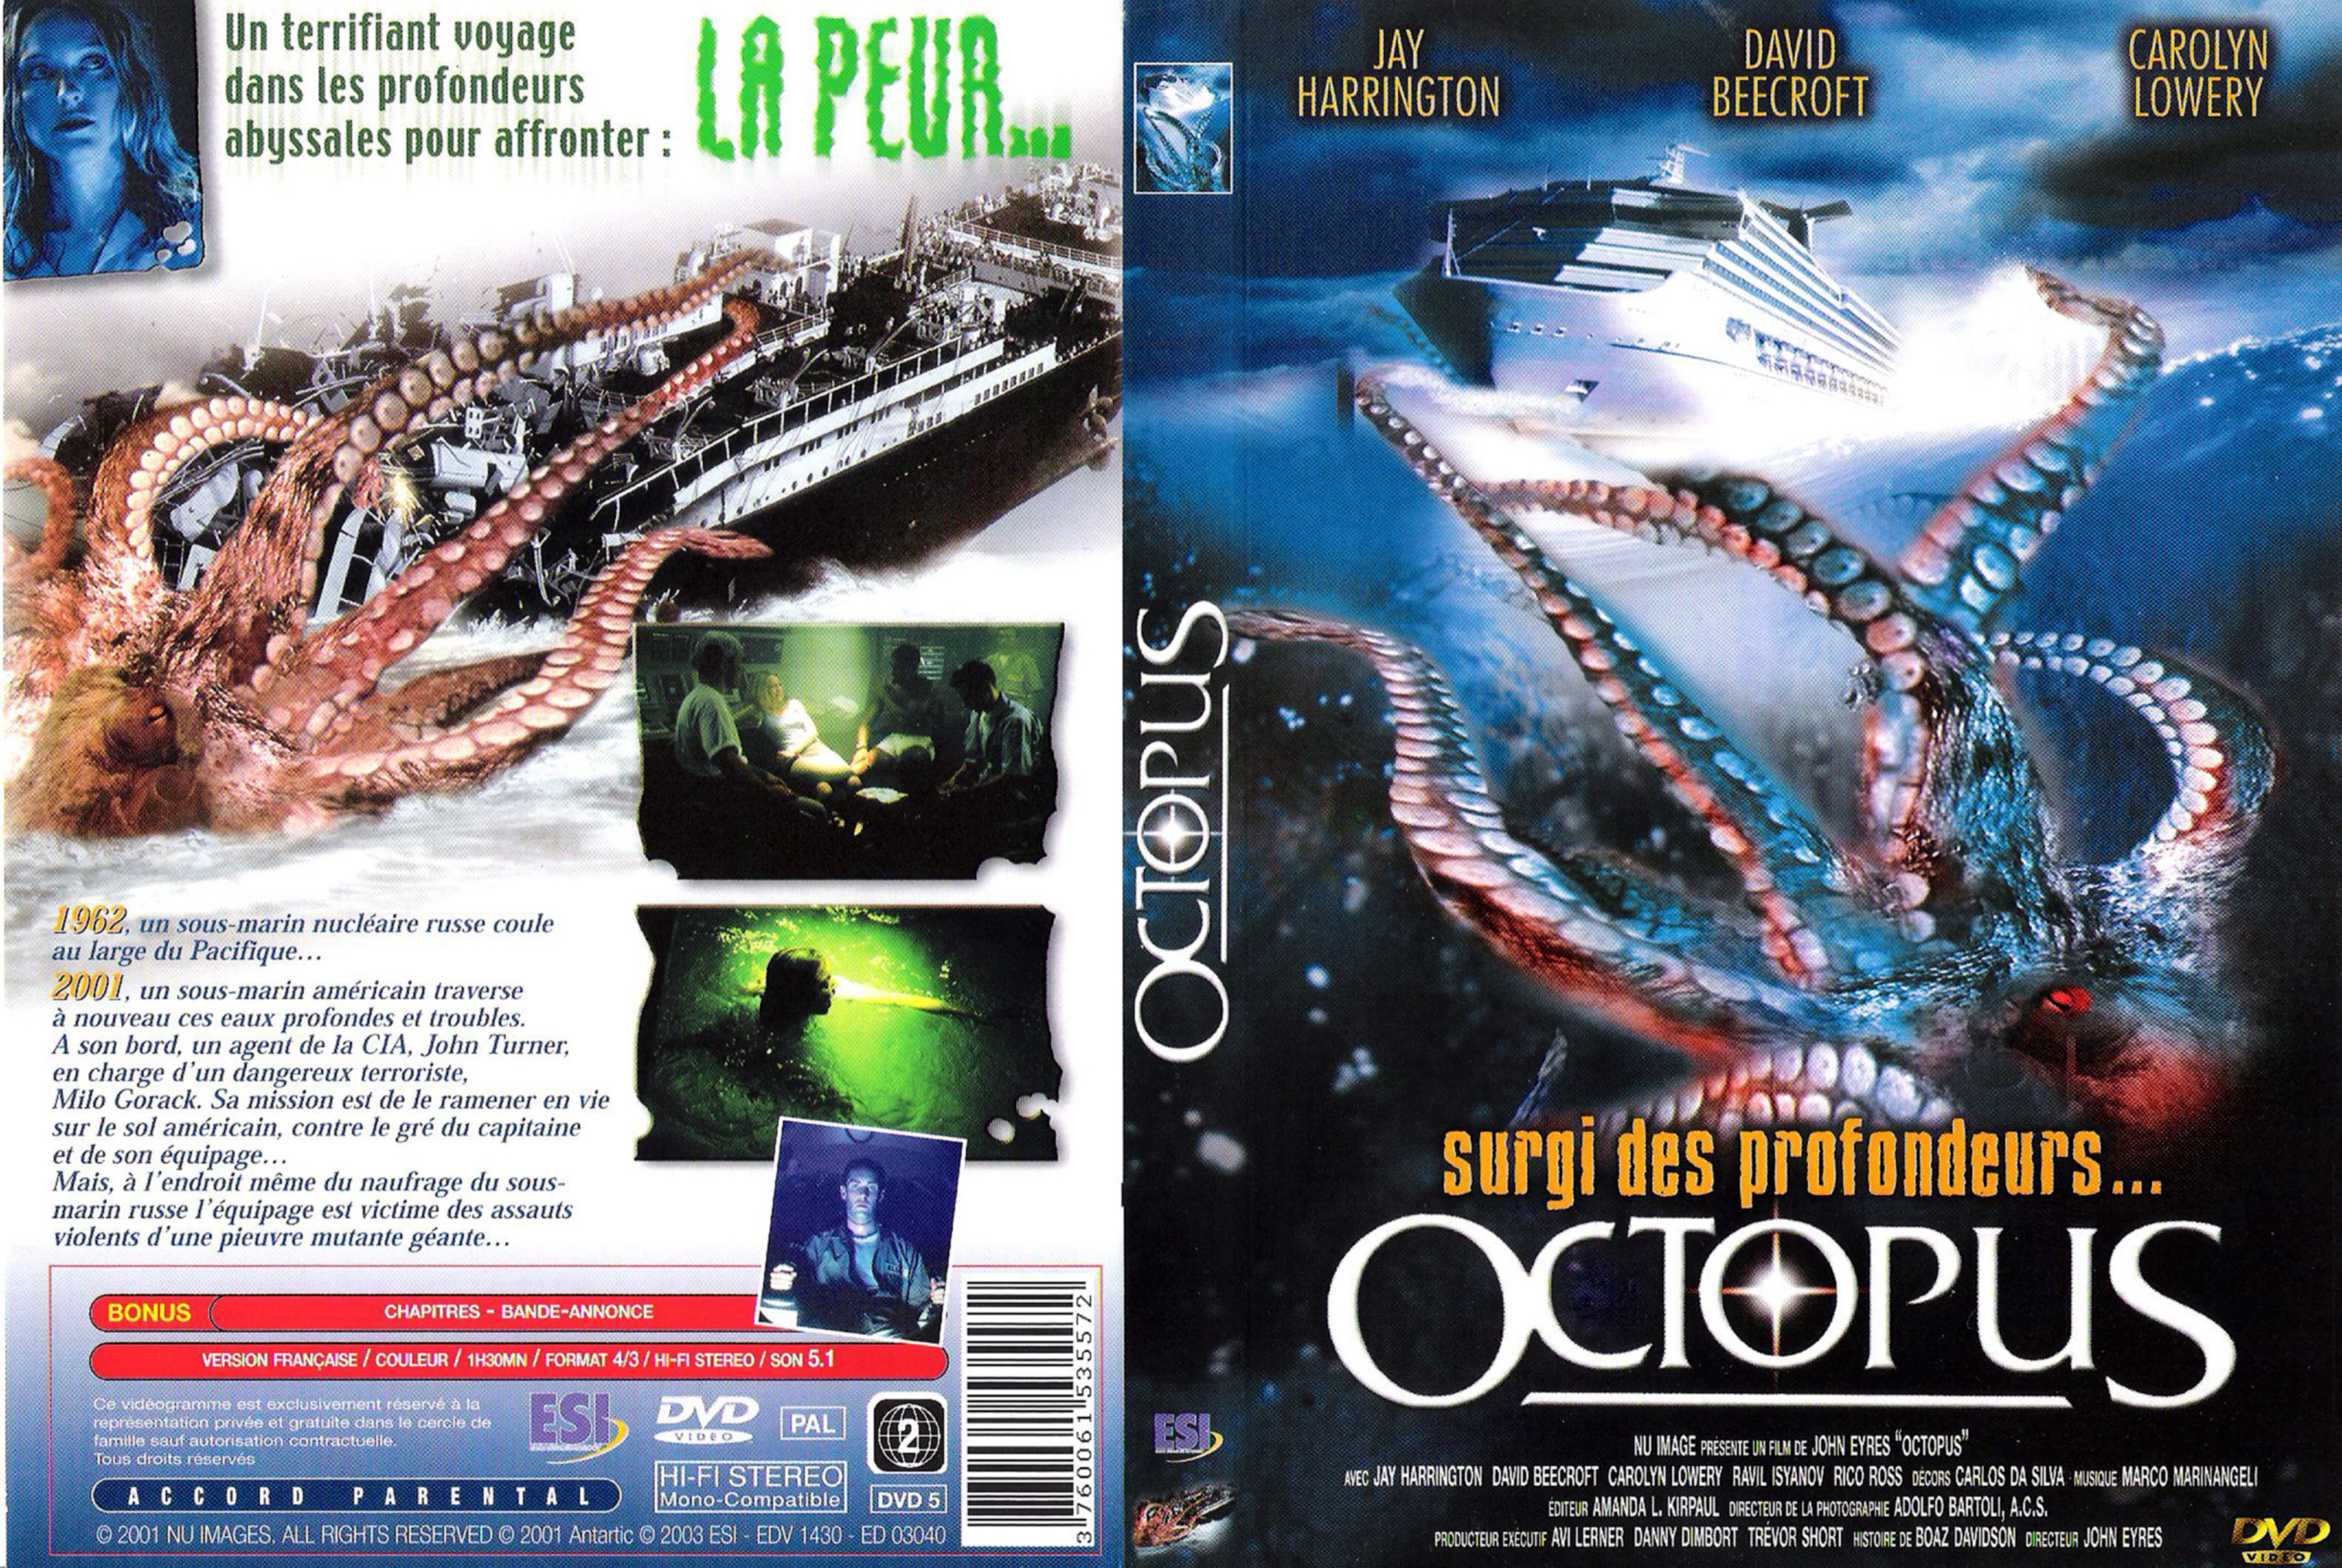 Jaquette DVD Octopus v2